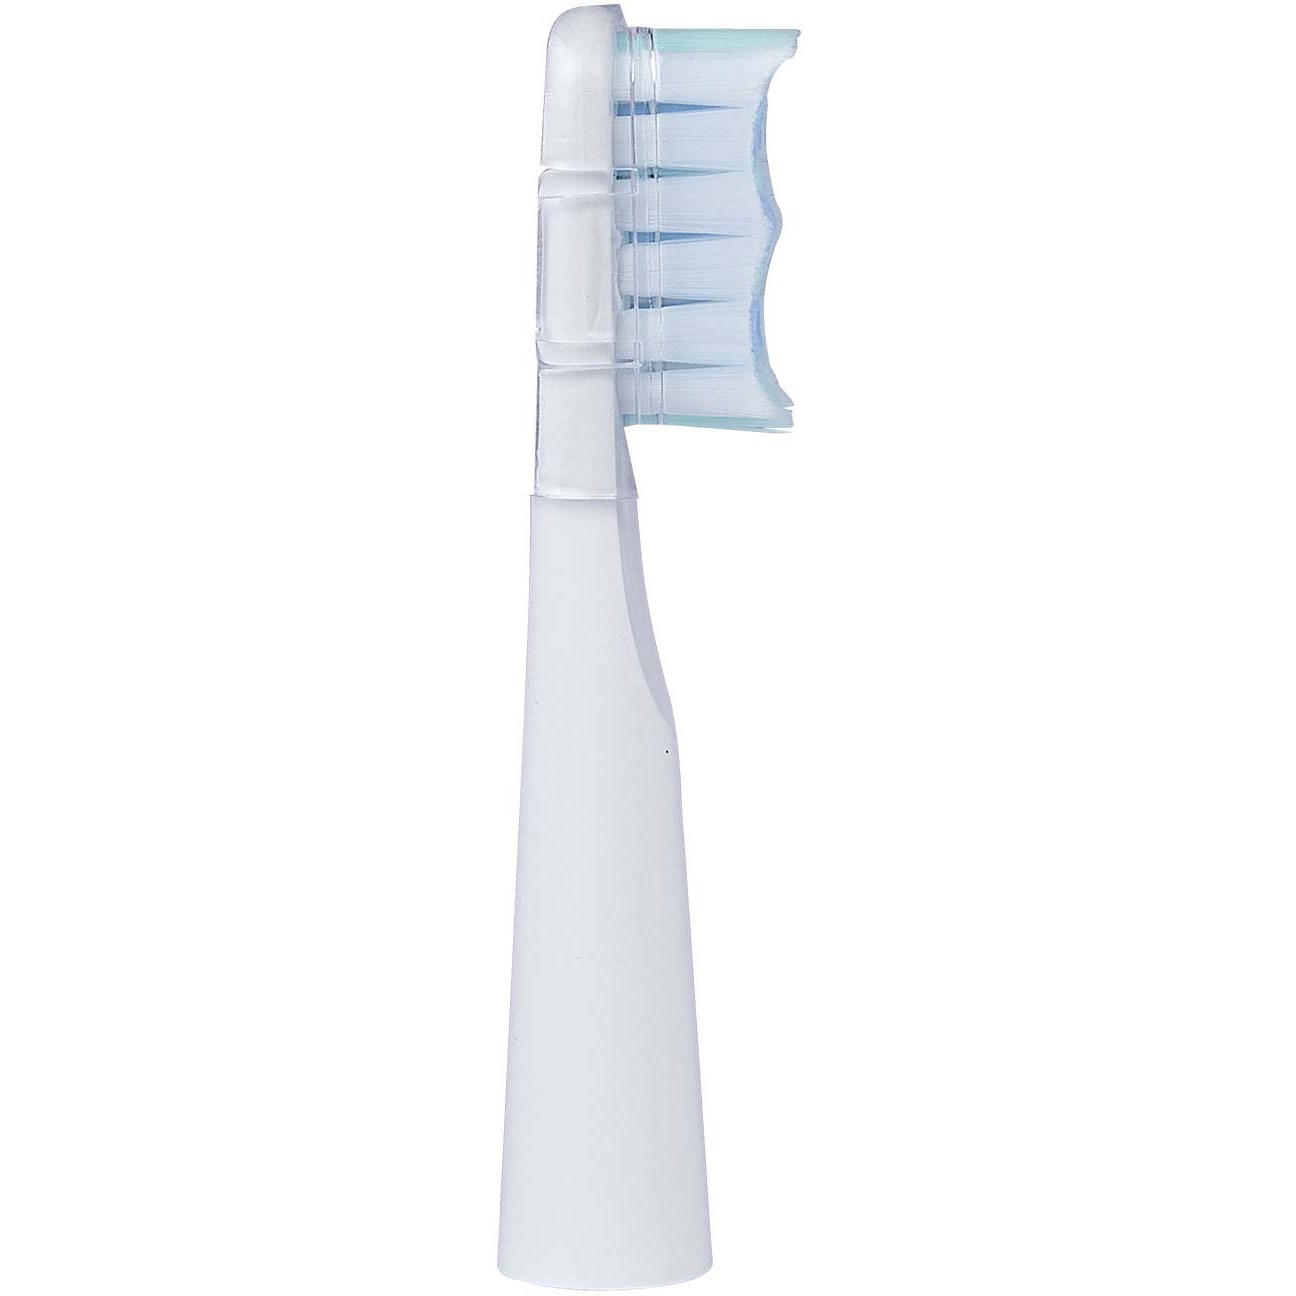 Bilde av Kent Brushes Kent Oral Care Sonik Electric Toothbrush Replacement Head